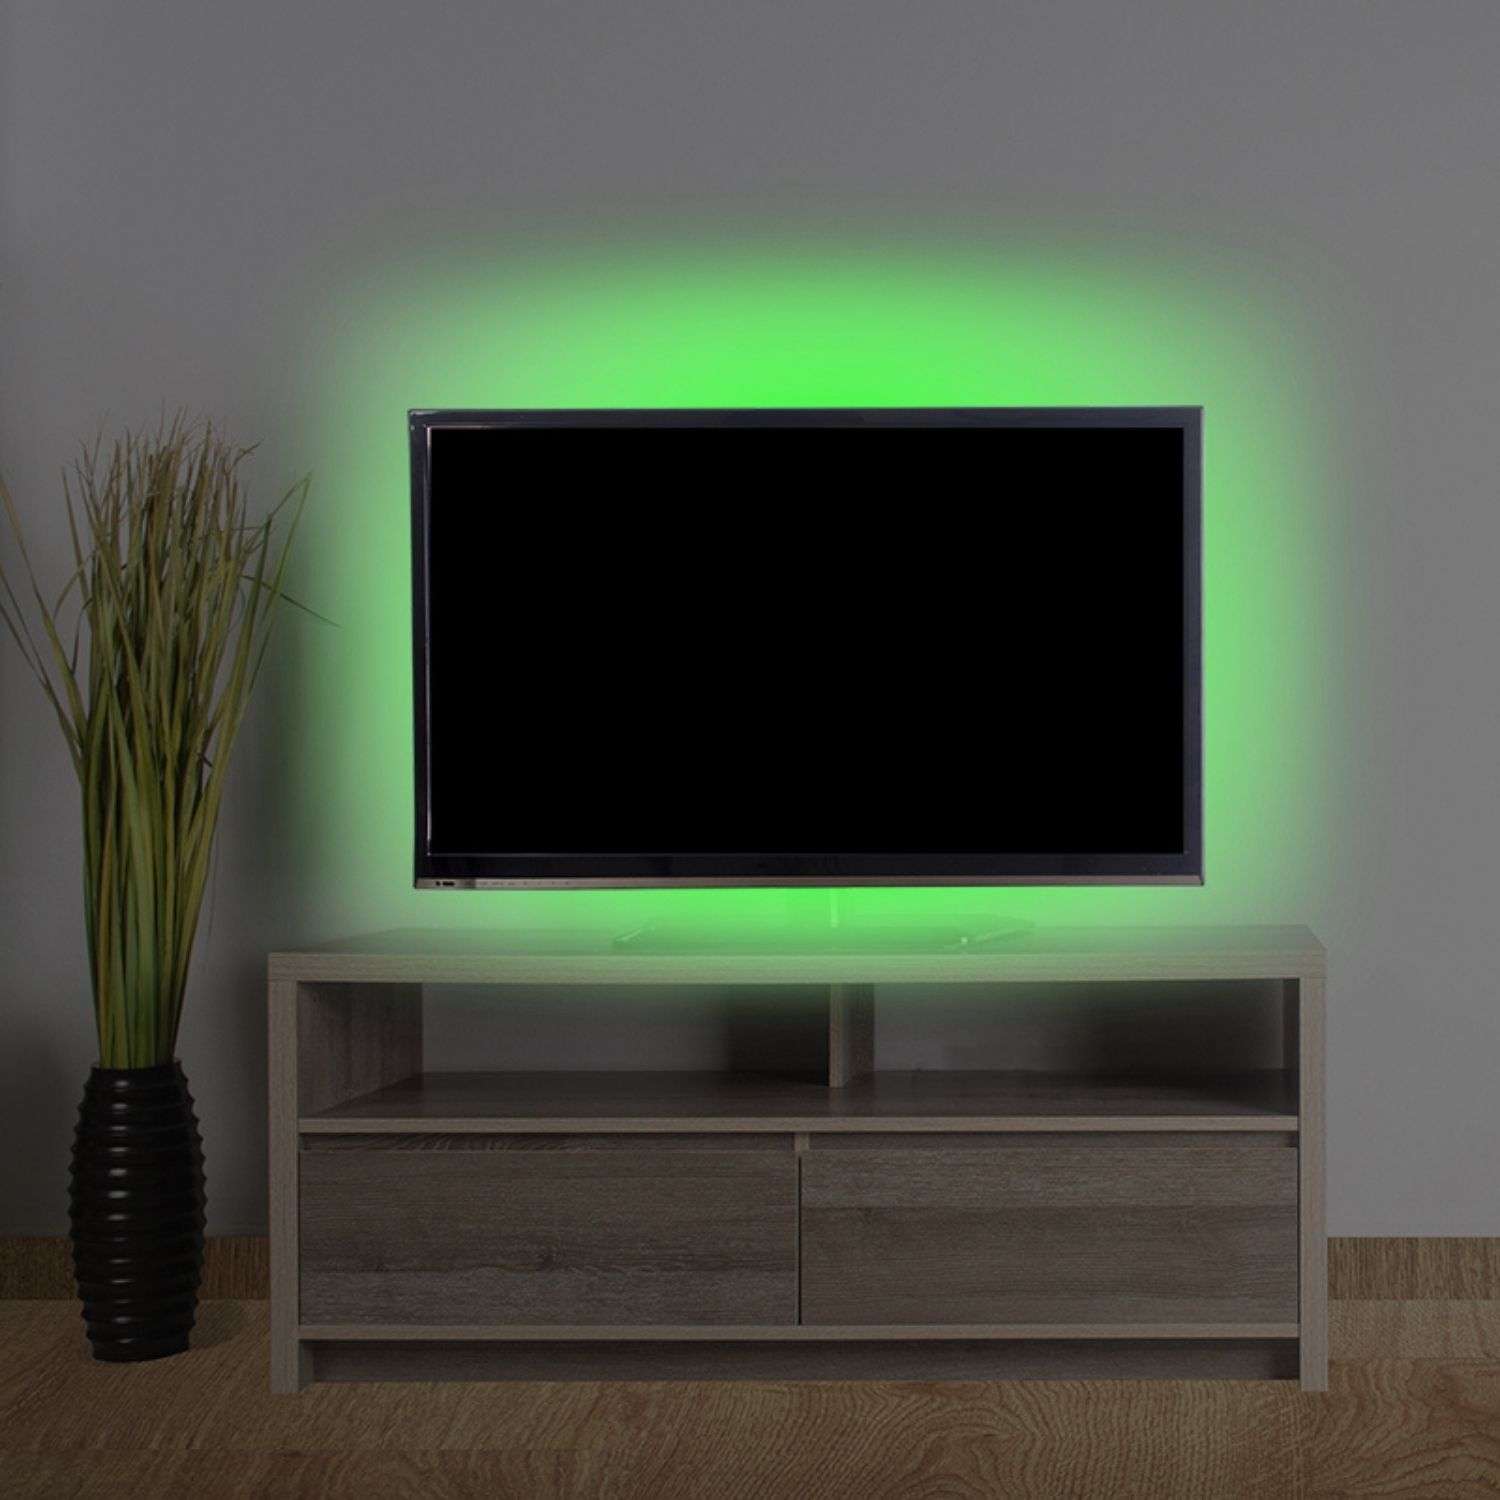 Светодиодная лента LAMPER зеленая USB с клеевым основанием для подсветки телевизора и компьютера 1 метр - фото 6